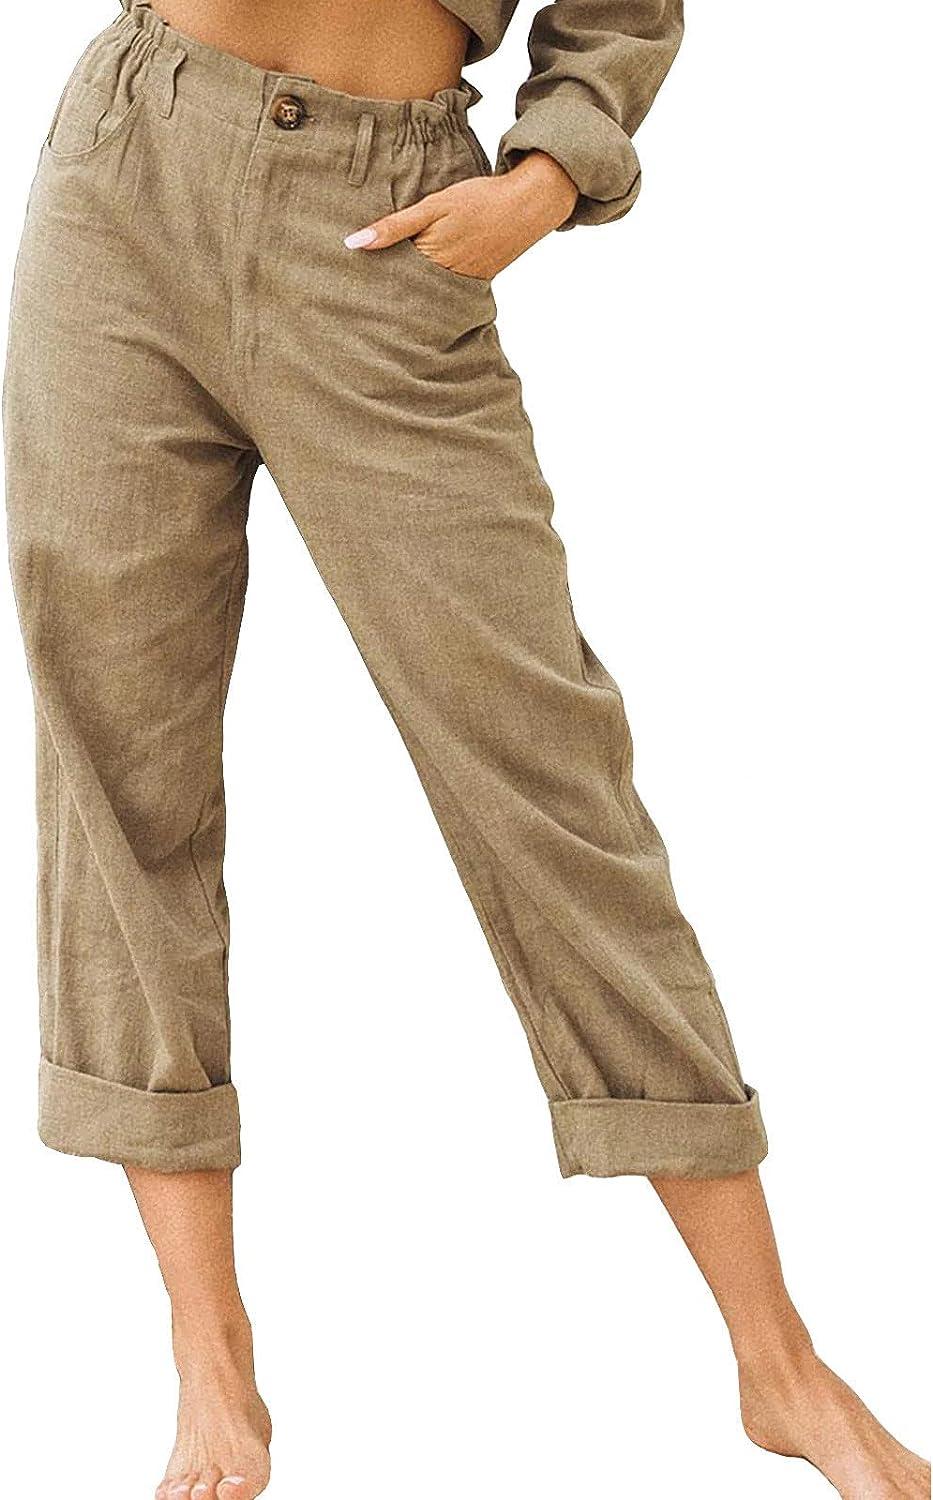 Linen Pants Women Summer Loose Fit Casual Cotton Linen Capri Pants Elastic  Waist Comfort Yoga Pants Trousers with Pocket